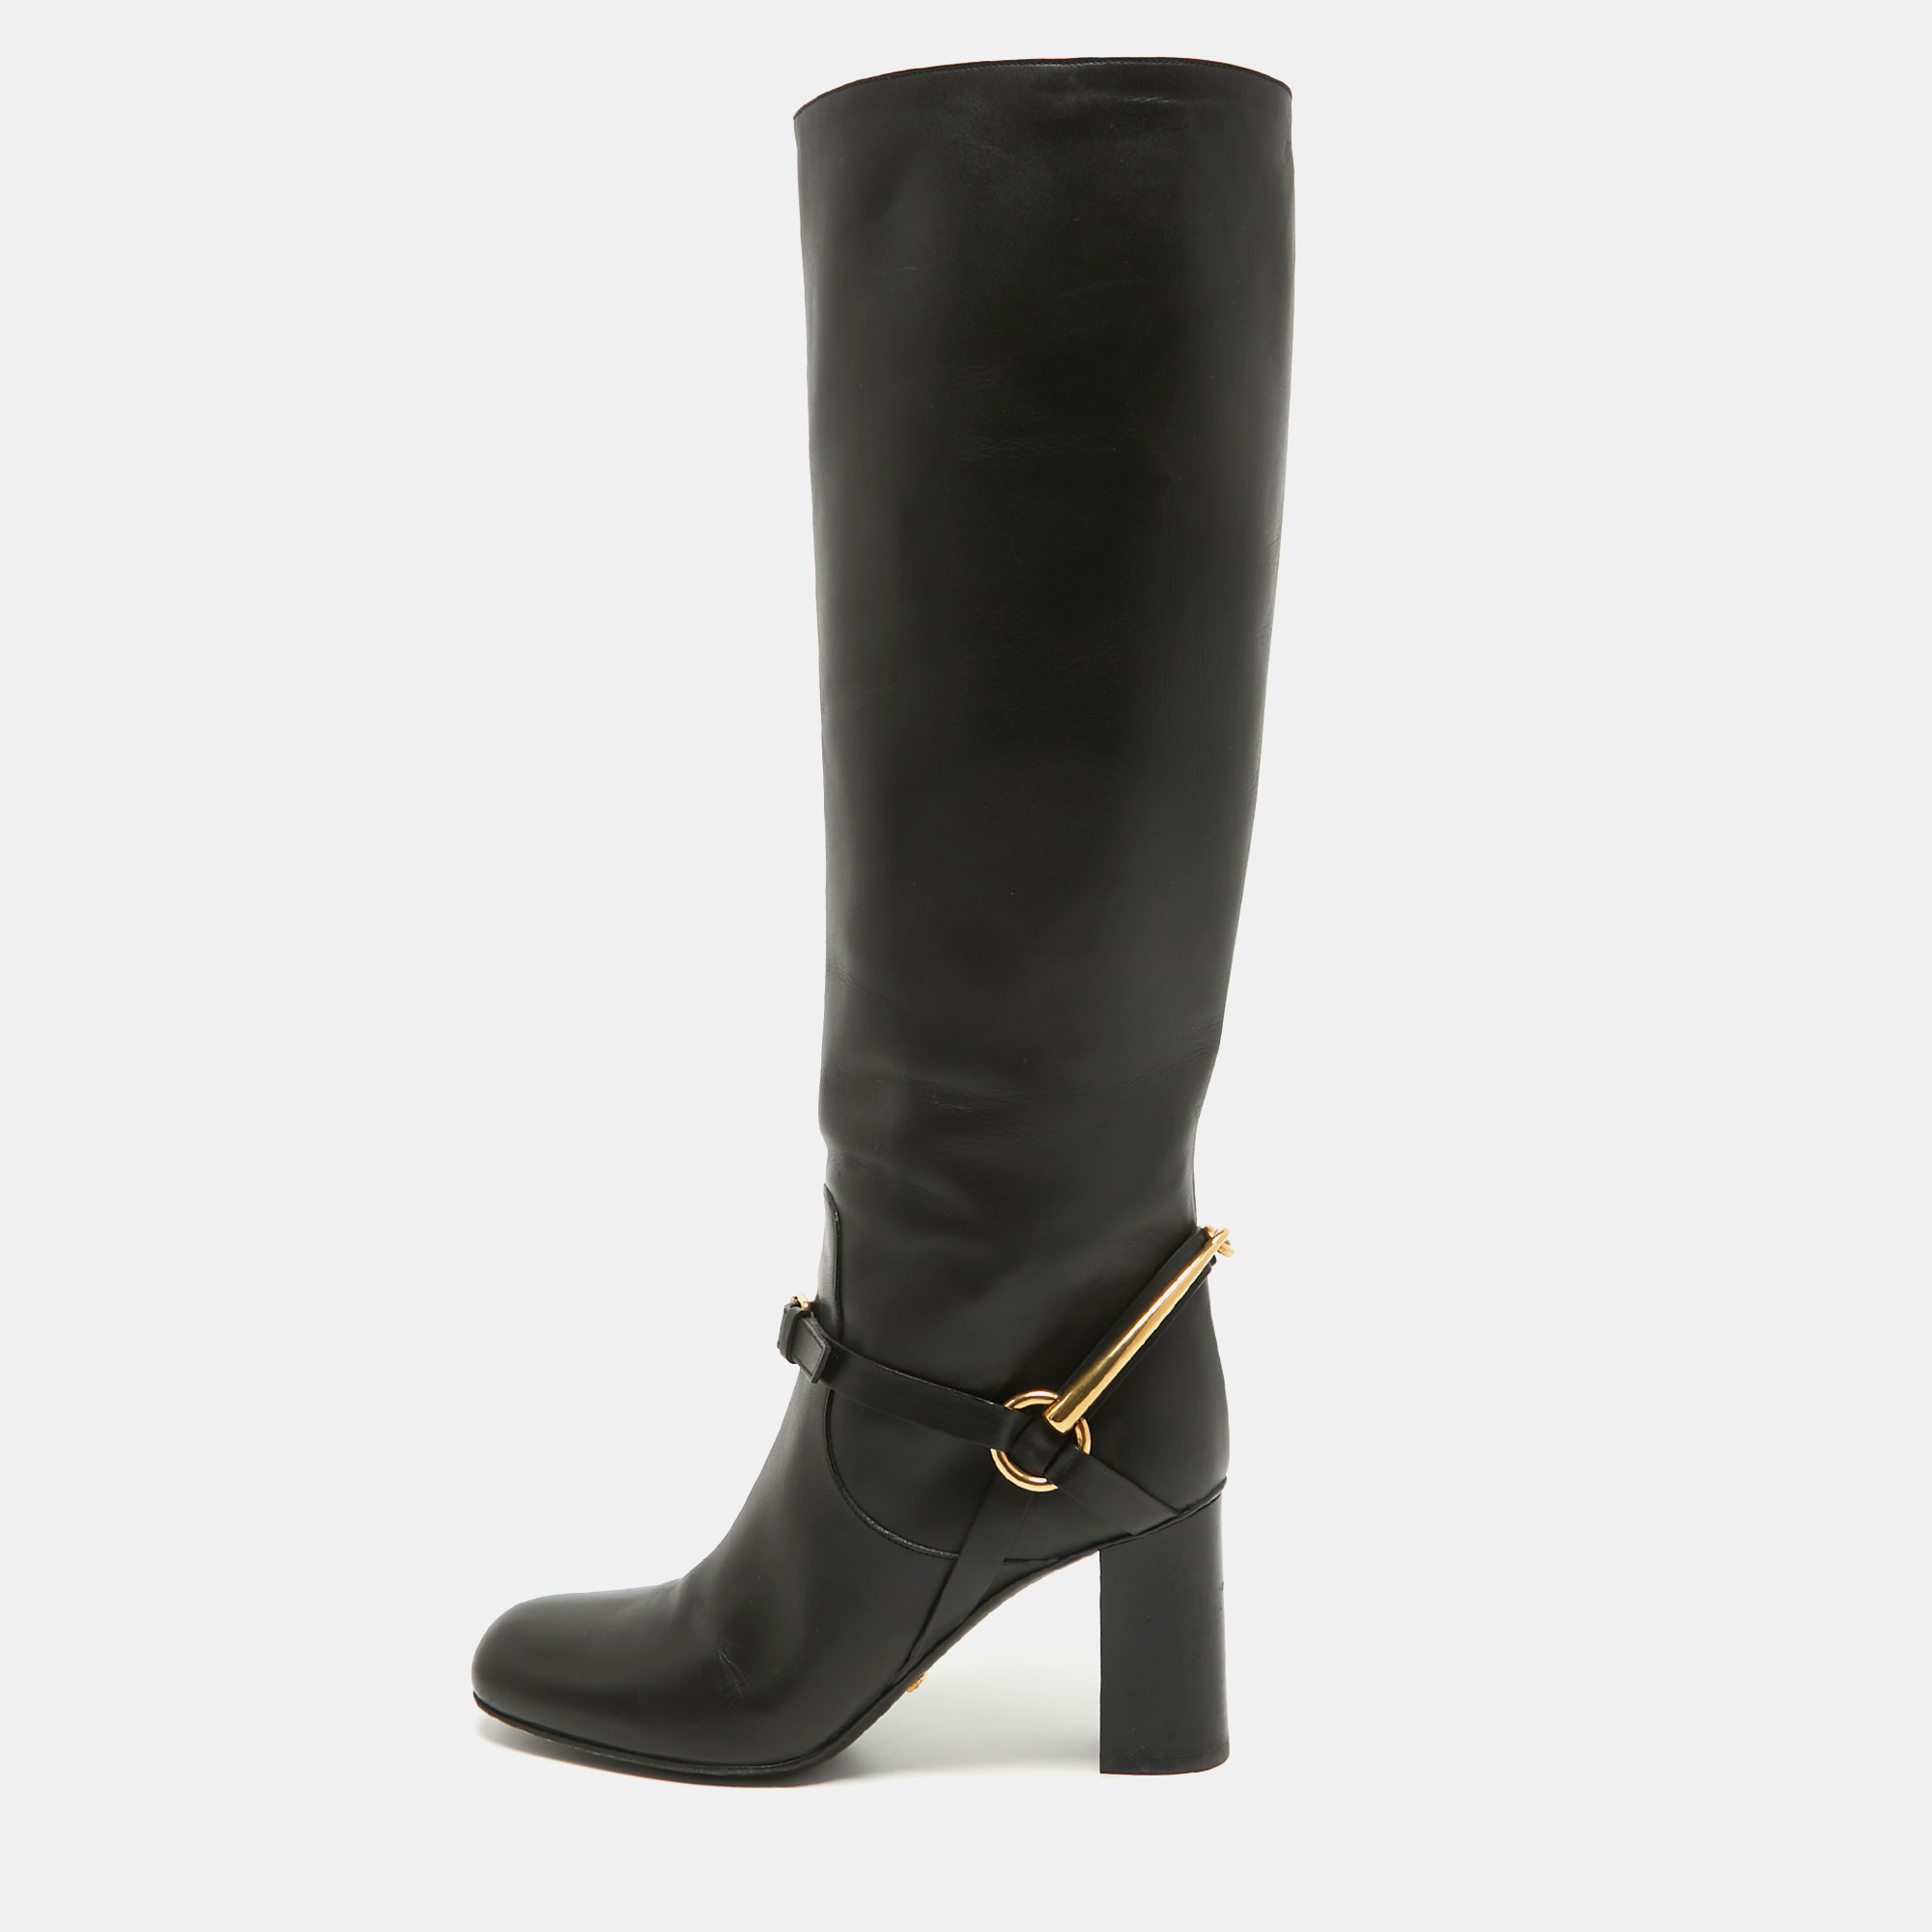 Gucci Black Leather Horsebit Knee Length Boots Size 36.5